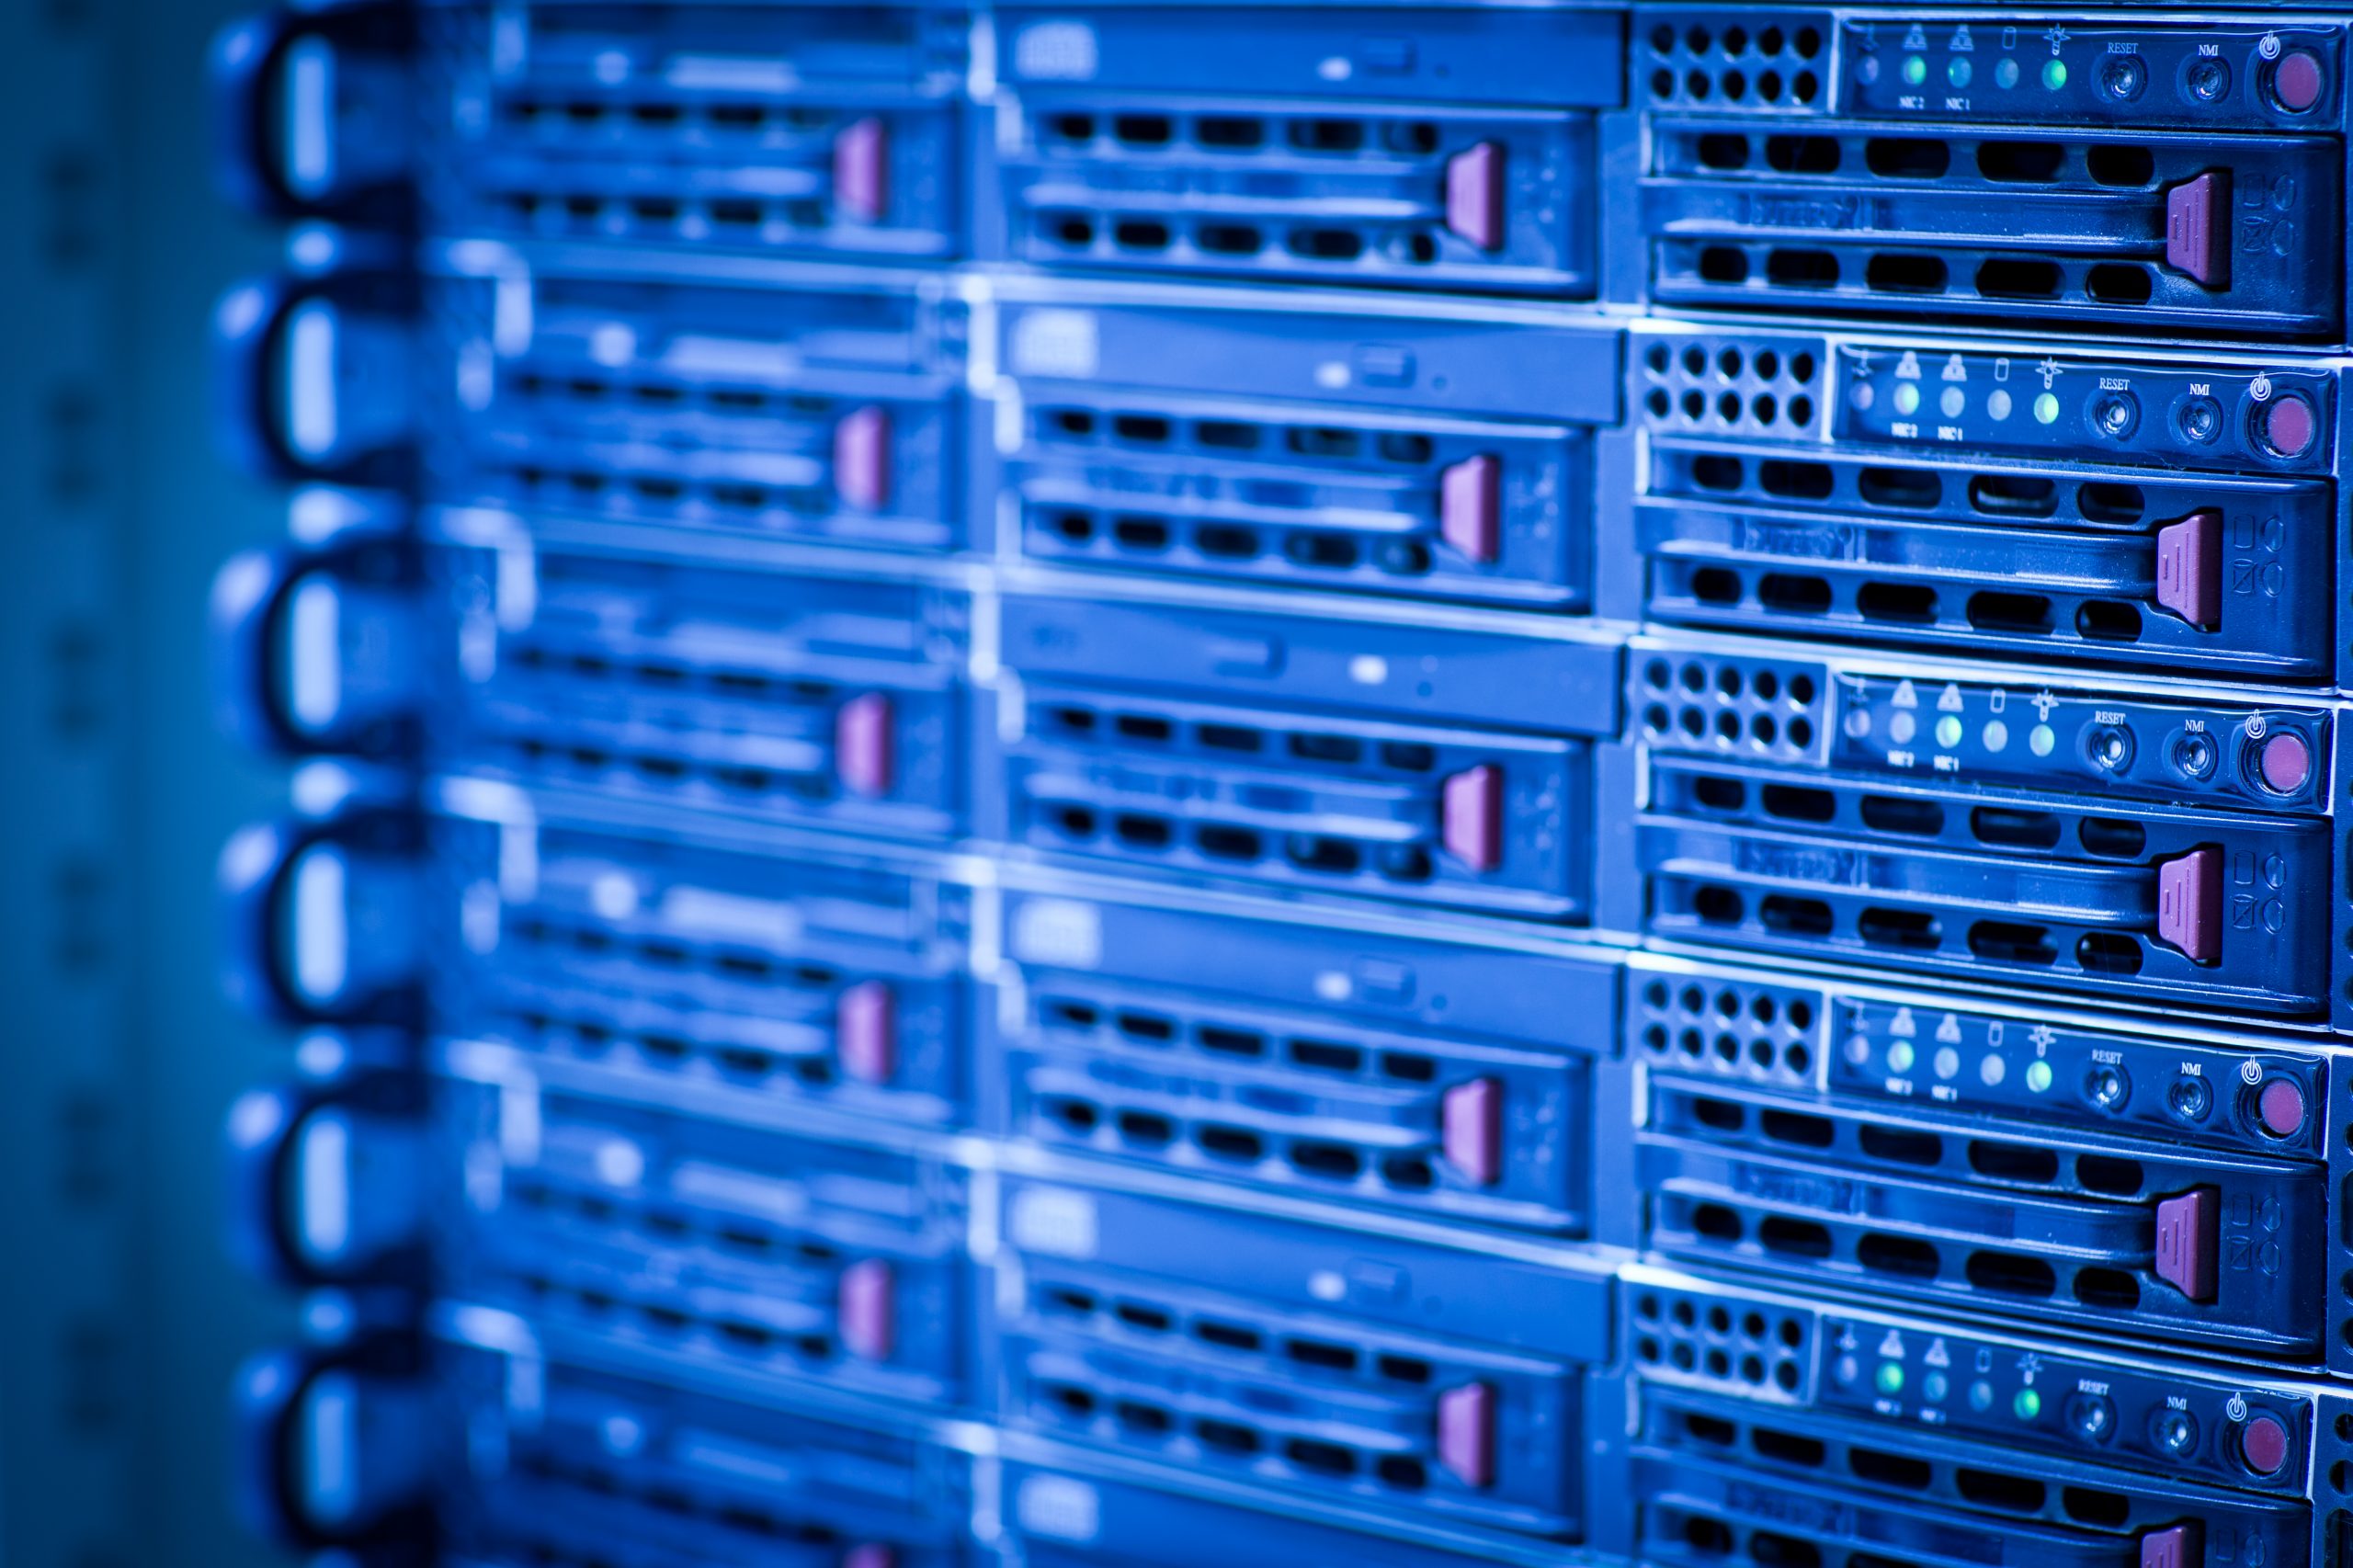 Server rack cluster in a data center blue